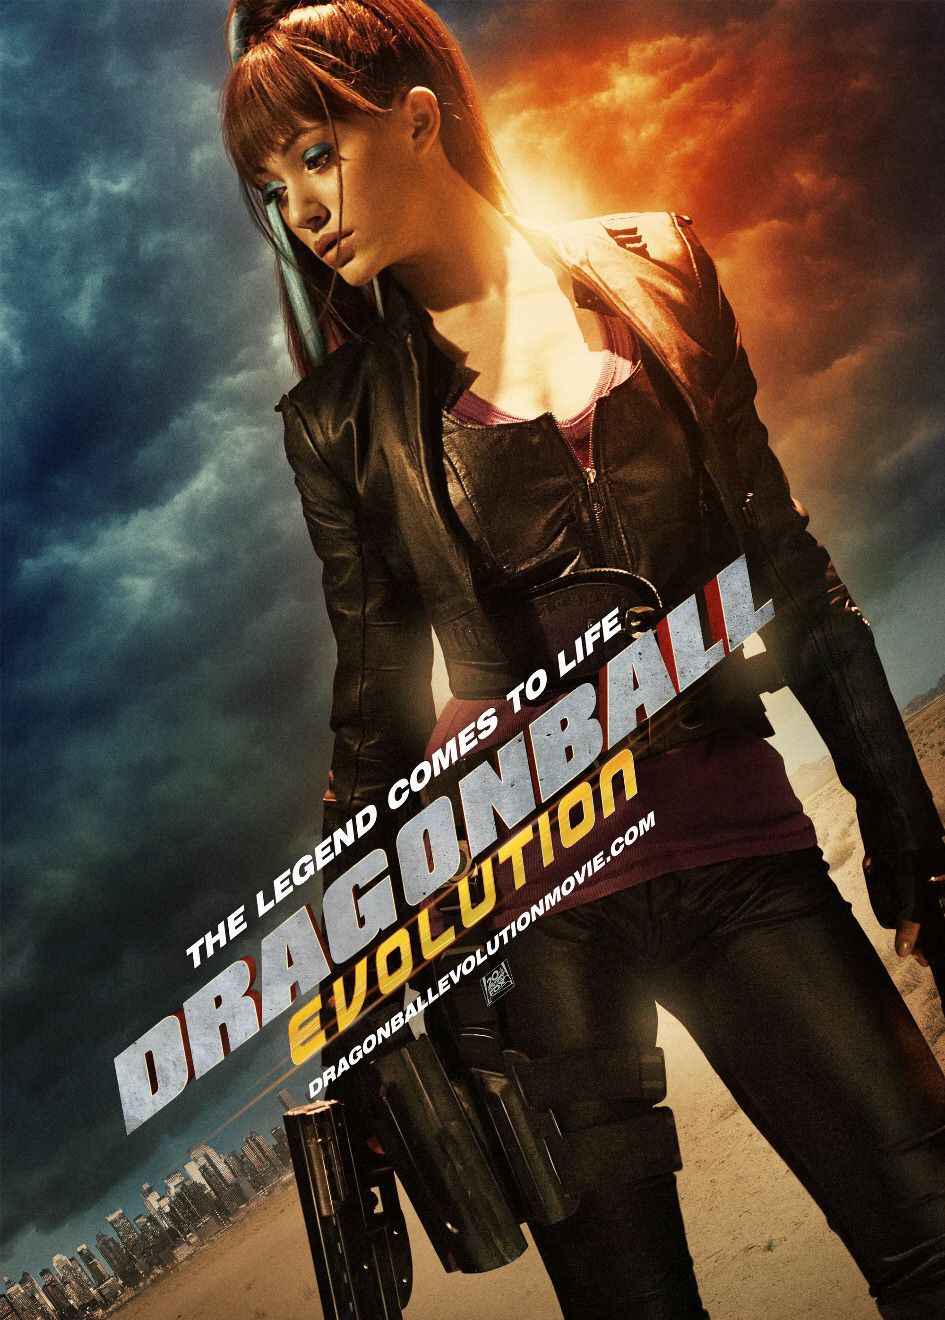 Dragonball Evolution 2 - Full Movie 